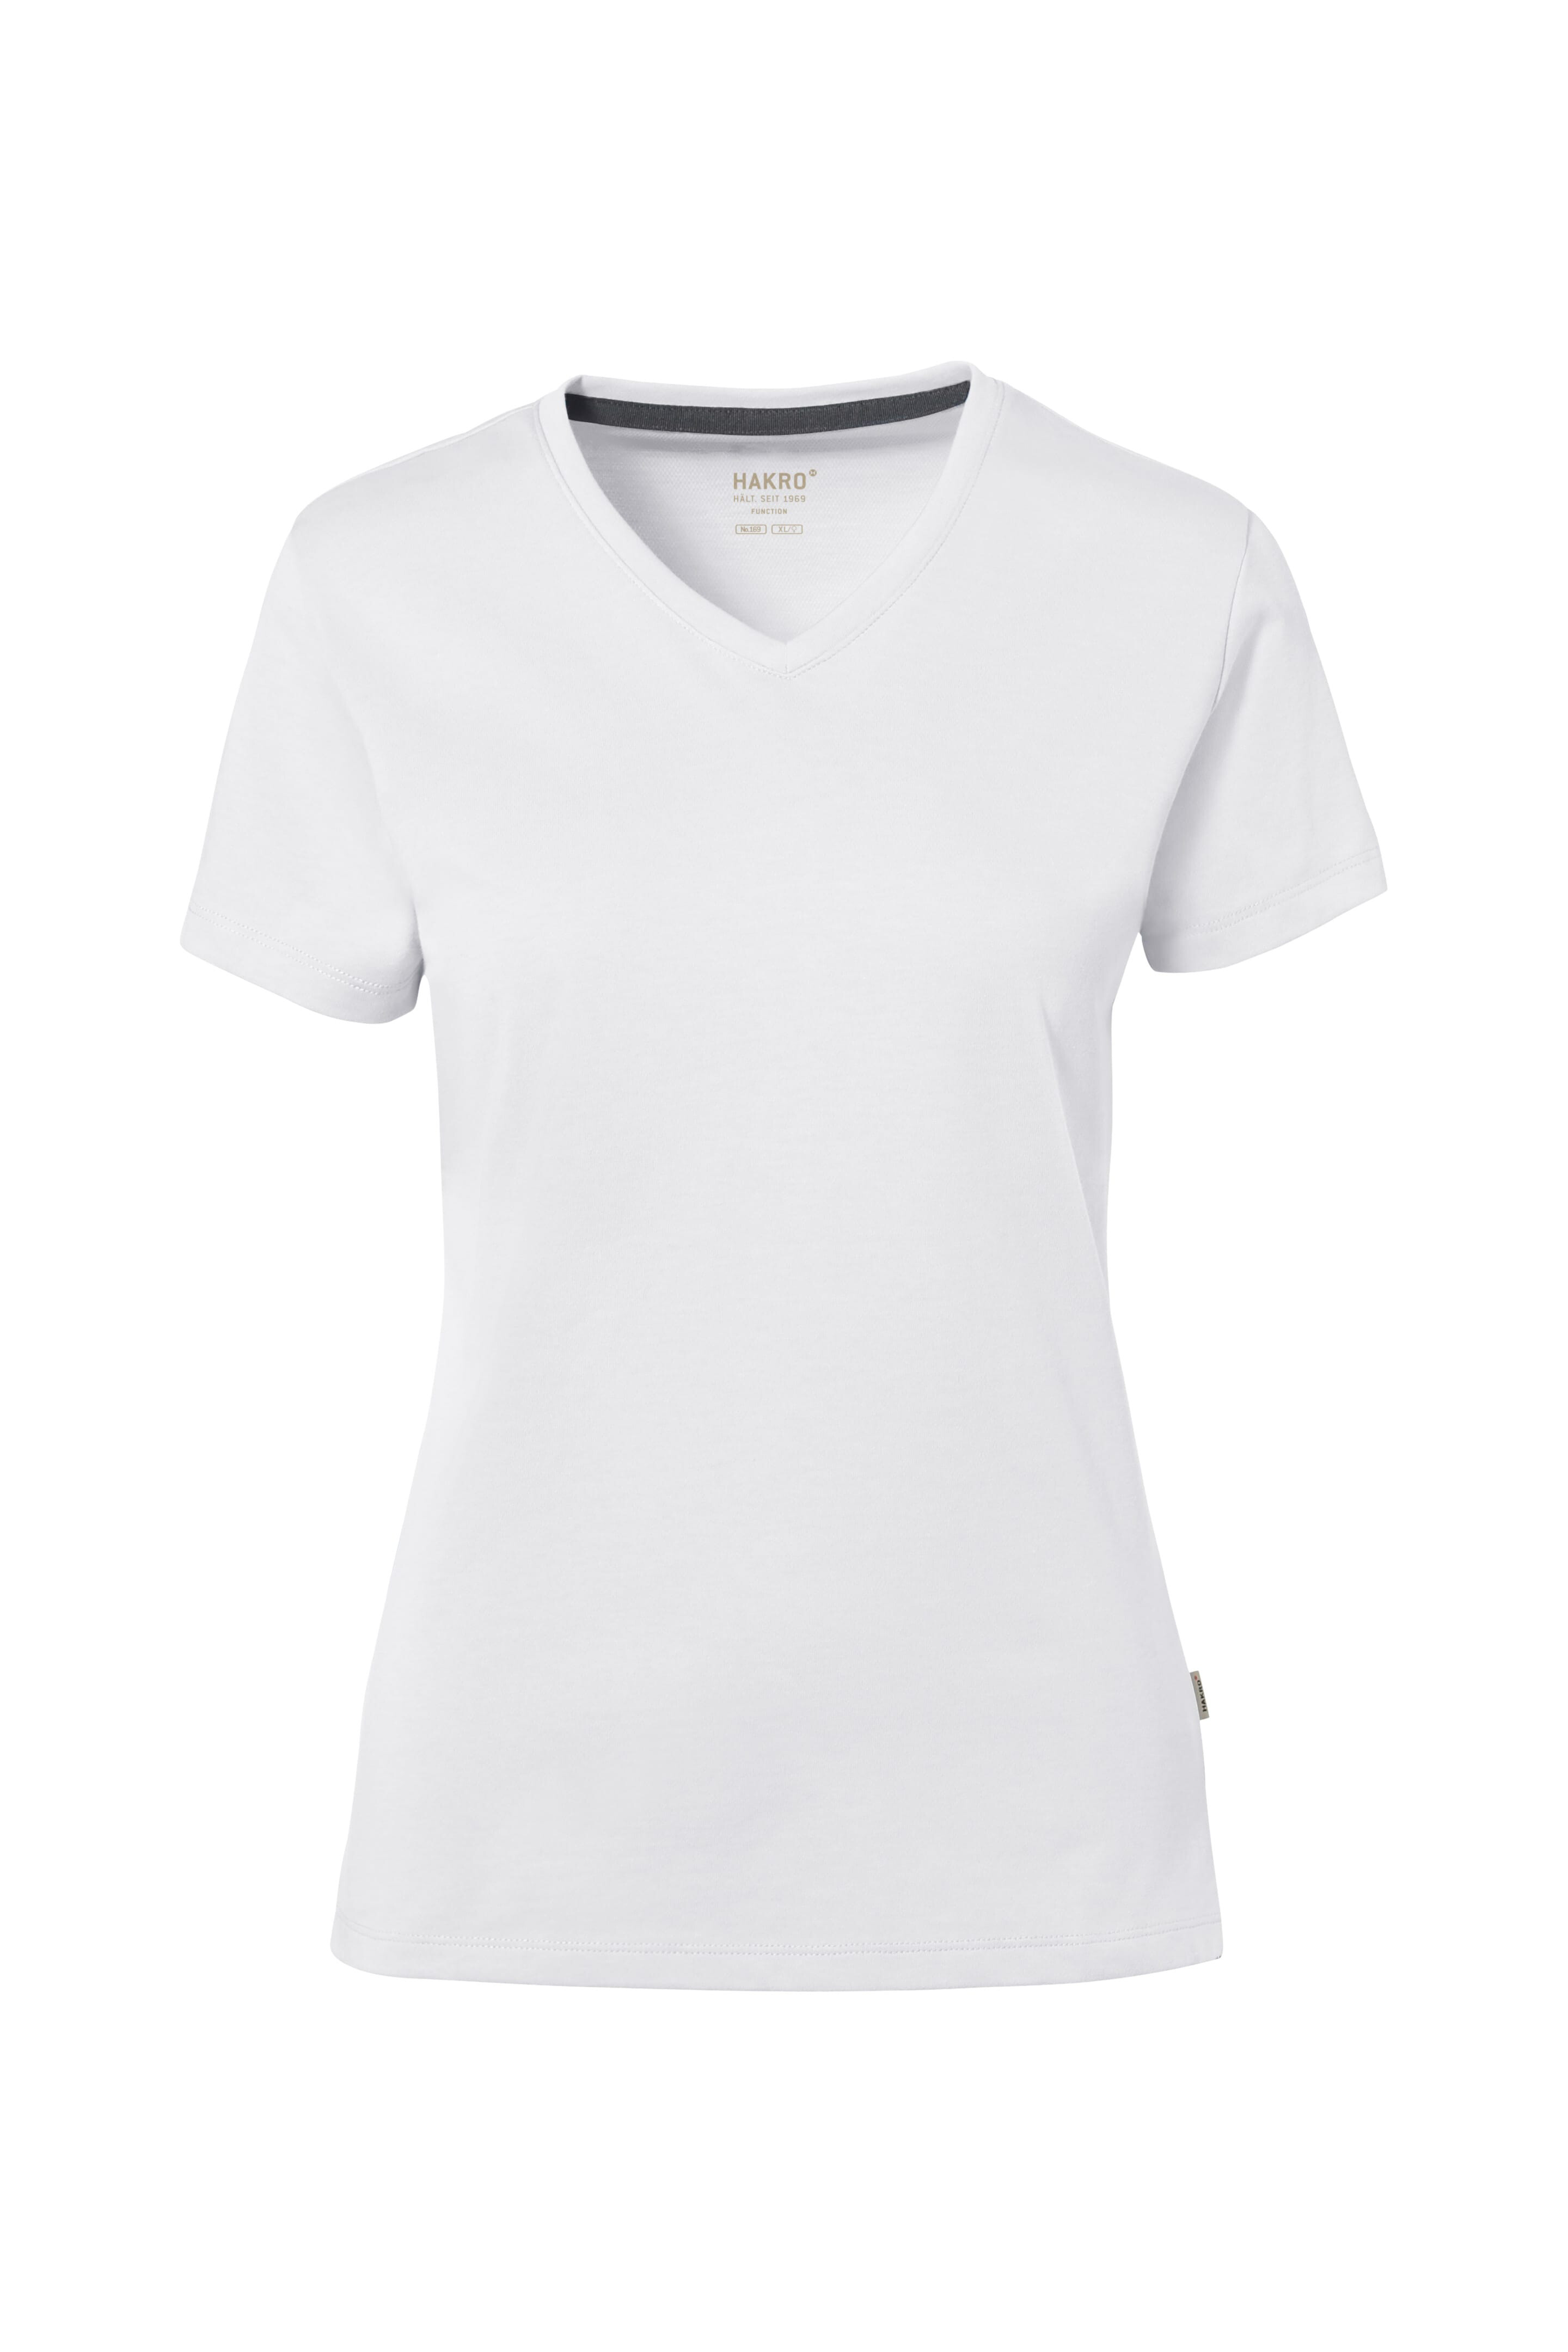 Damen V-Shirt Cotton Tec von Hakro No. 169